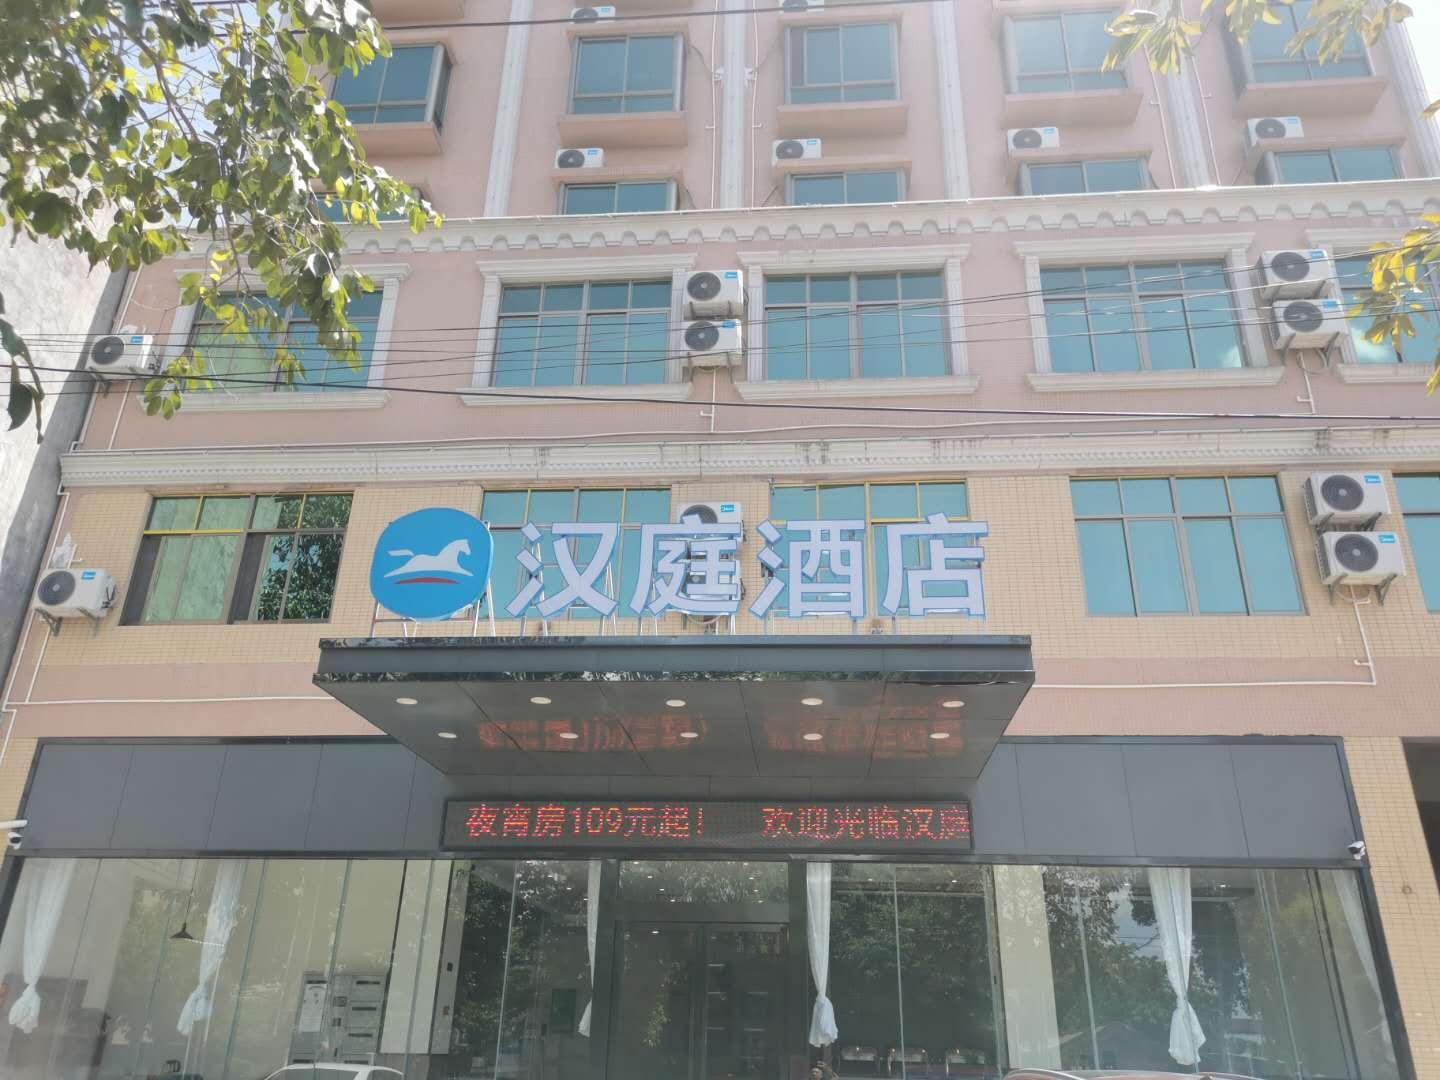 Exterior & Views 1, Hanting Hotel Ding'an County Renmin Hospital, Hainan